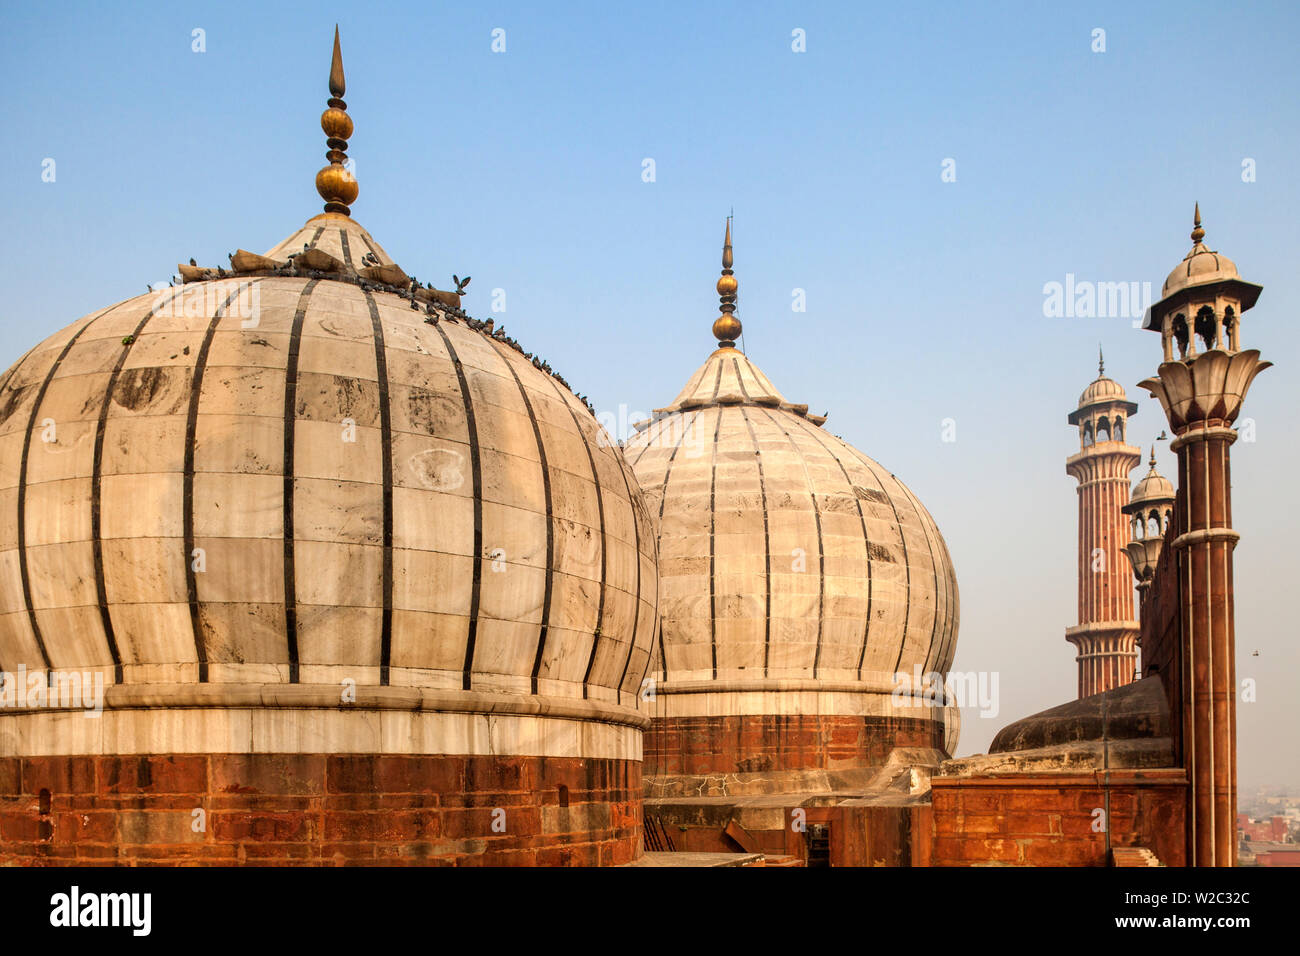 India, Delhi, Old Delhi , Jama Masjid - Jama Mosque built by Shah Jahan Stock Photo